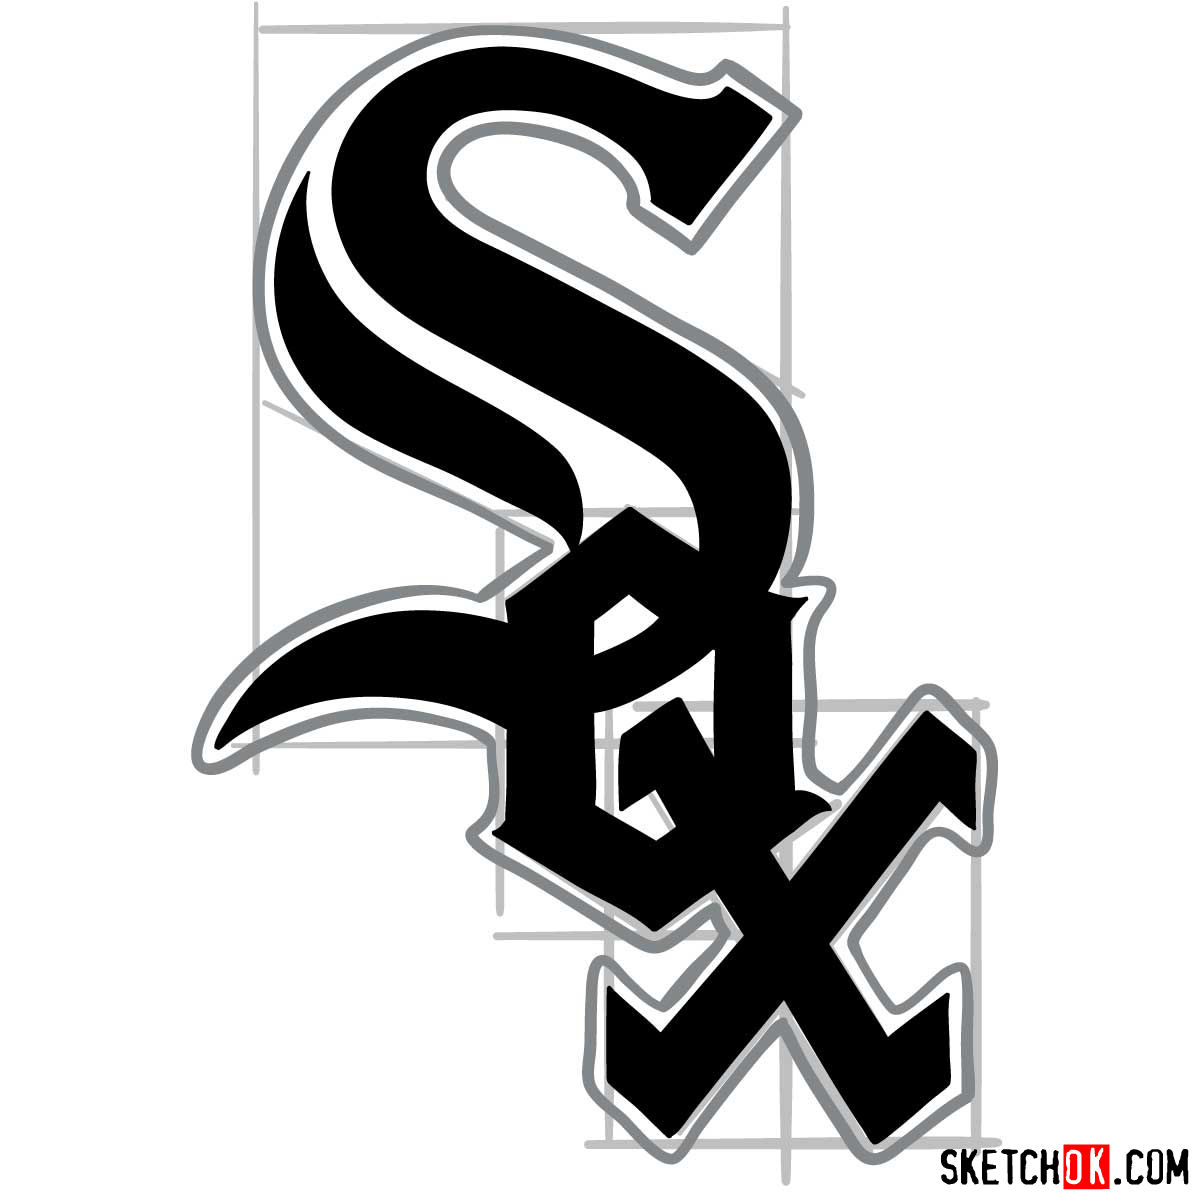 How to draw Chicago White Sox logo | MLB logos - step 12